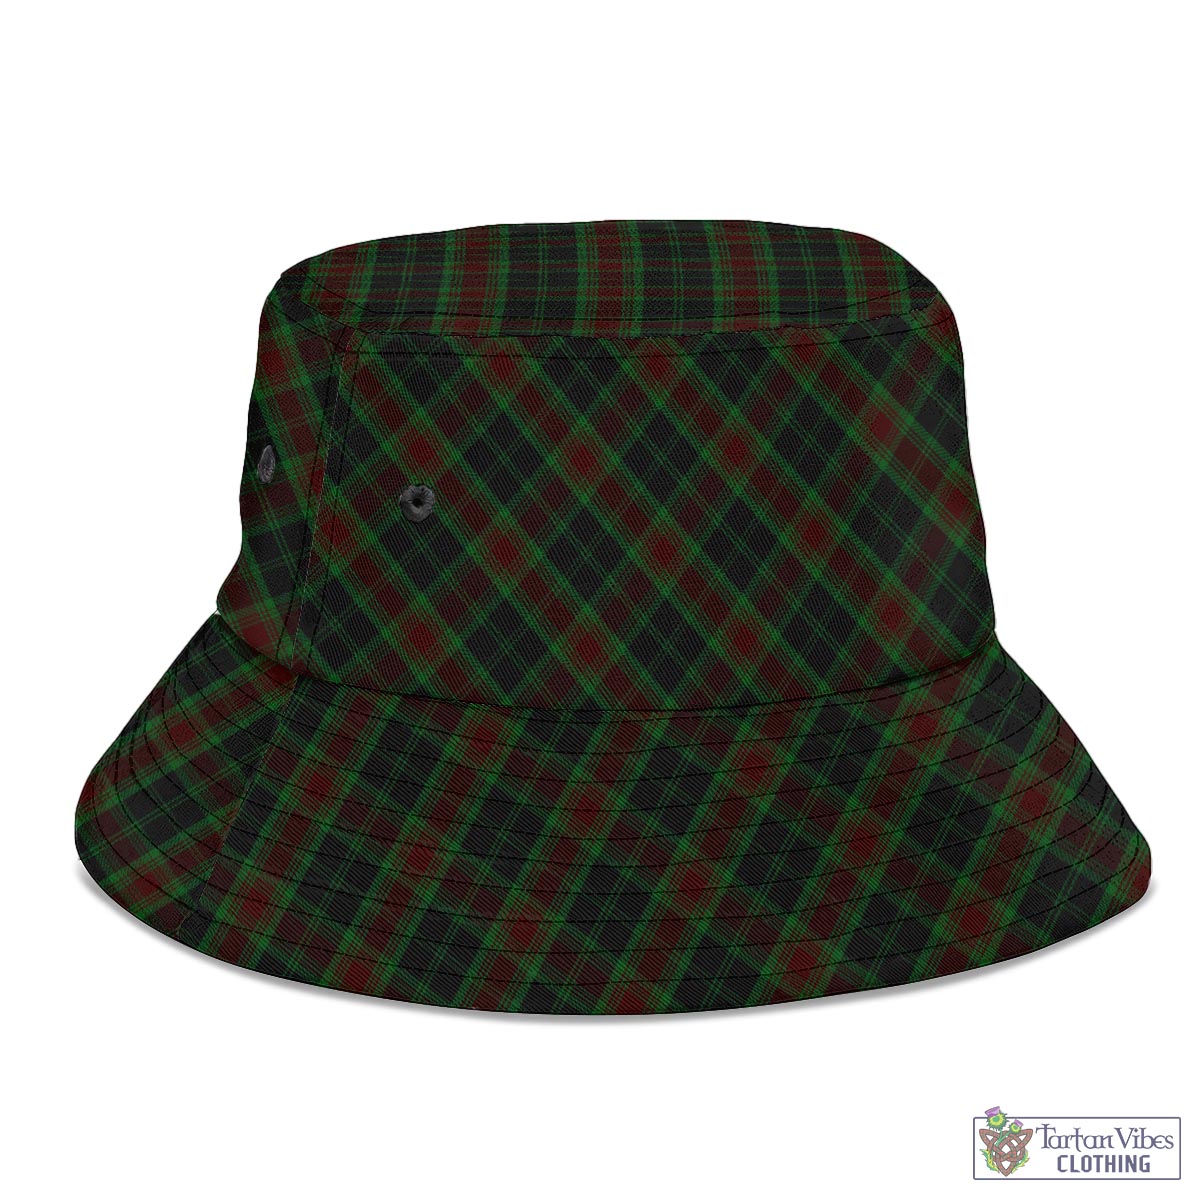 Tartan Vibes Clothing Carlow County Ireland Tartan Bucket Hat